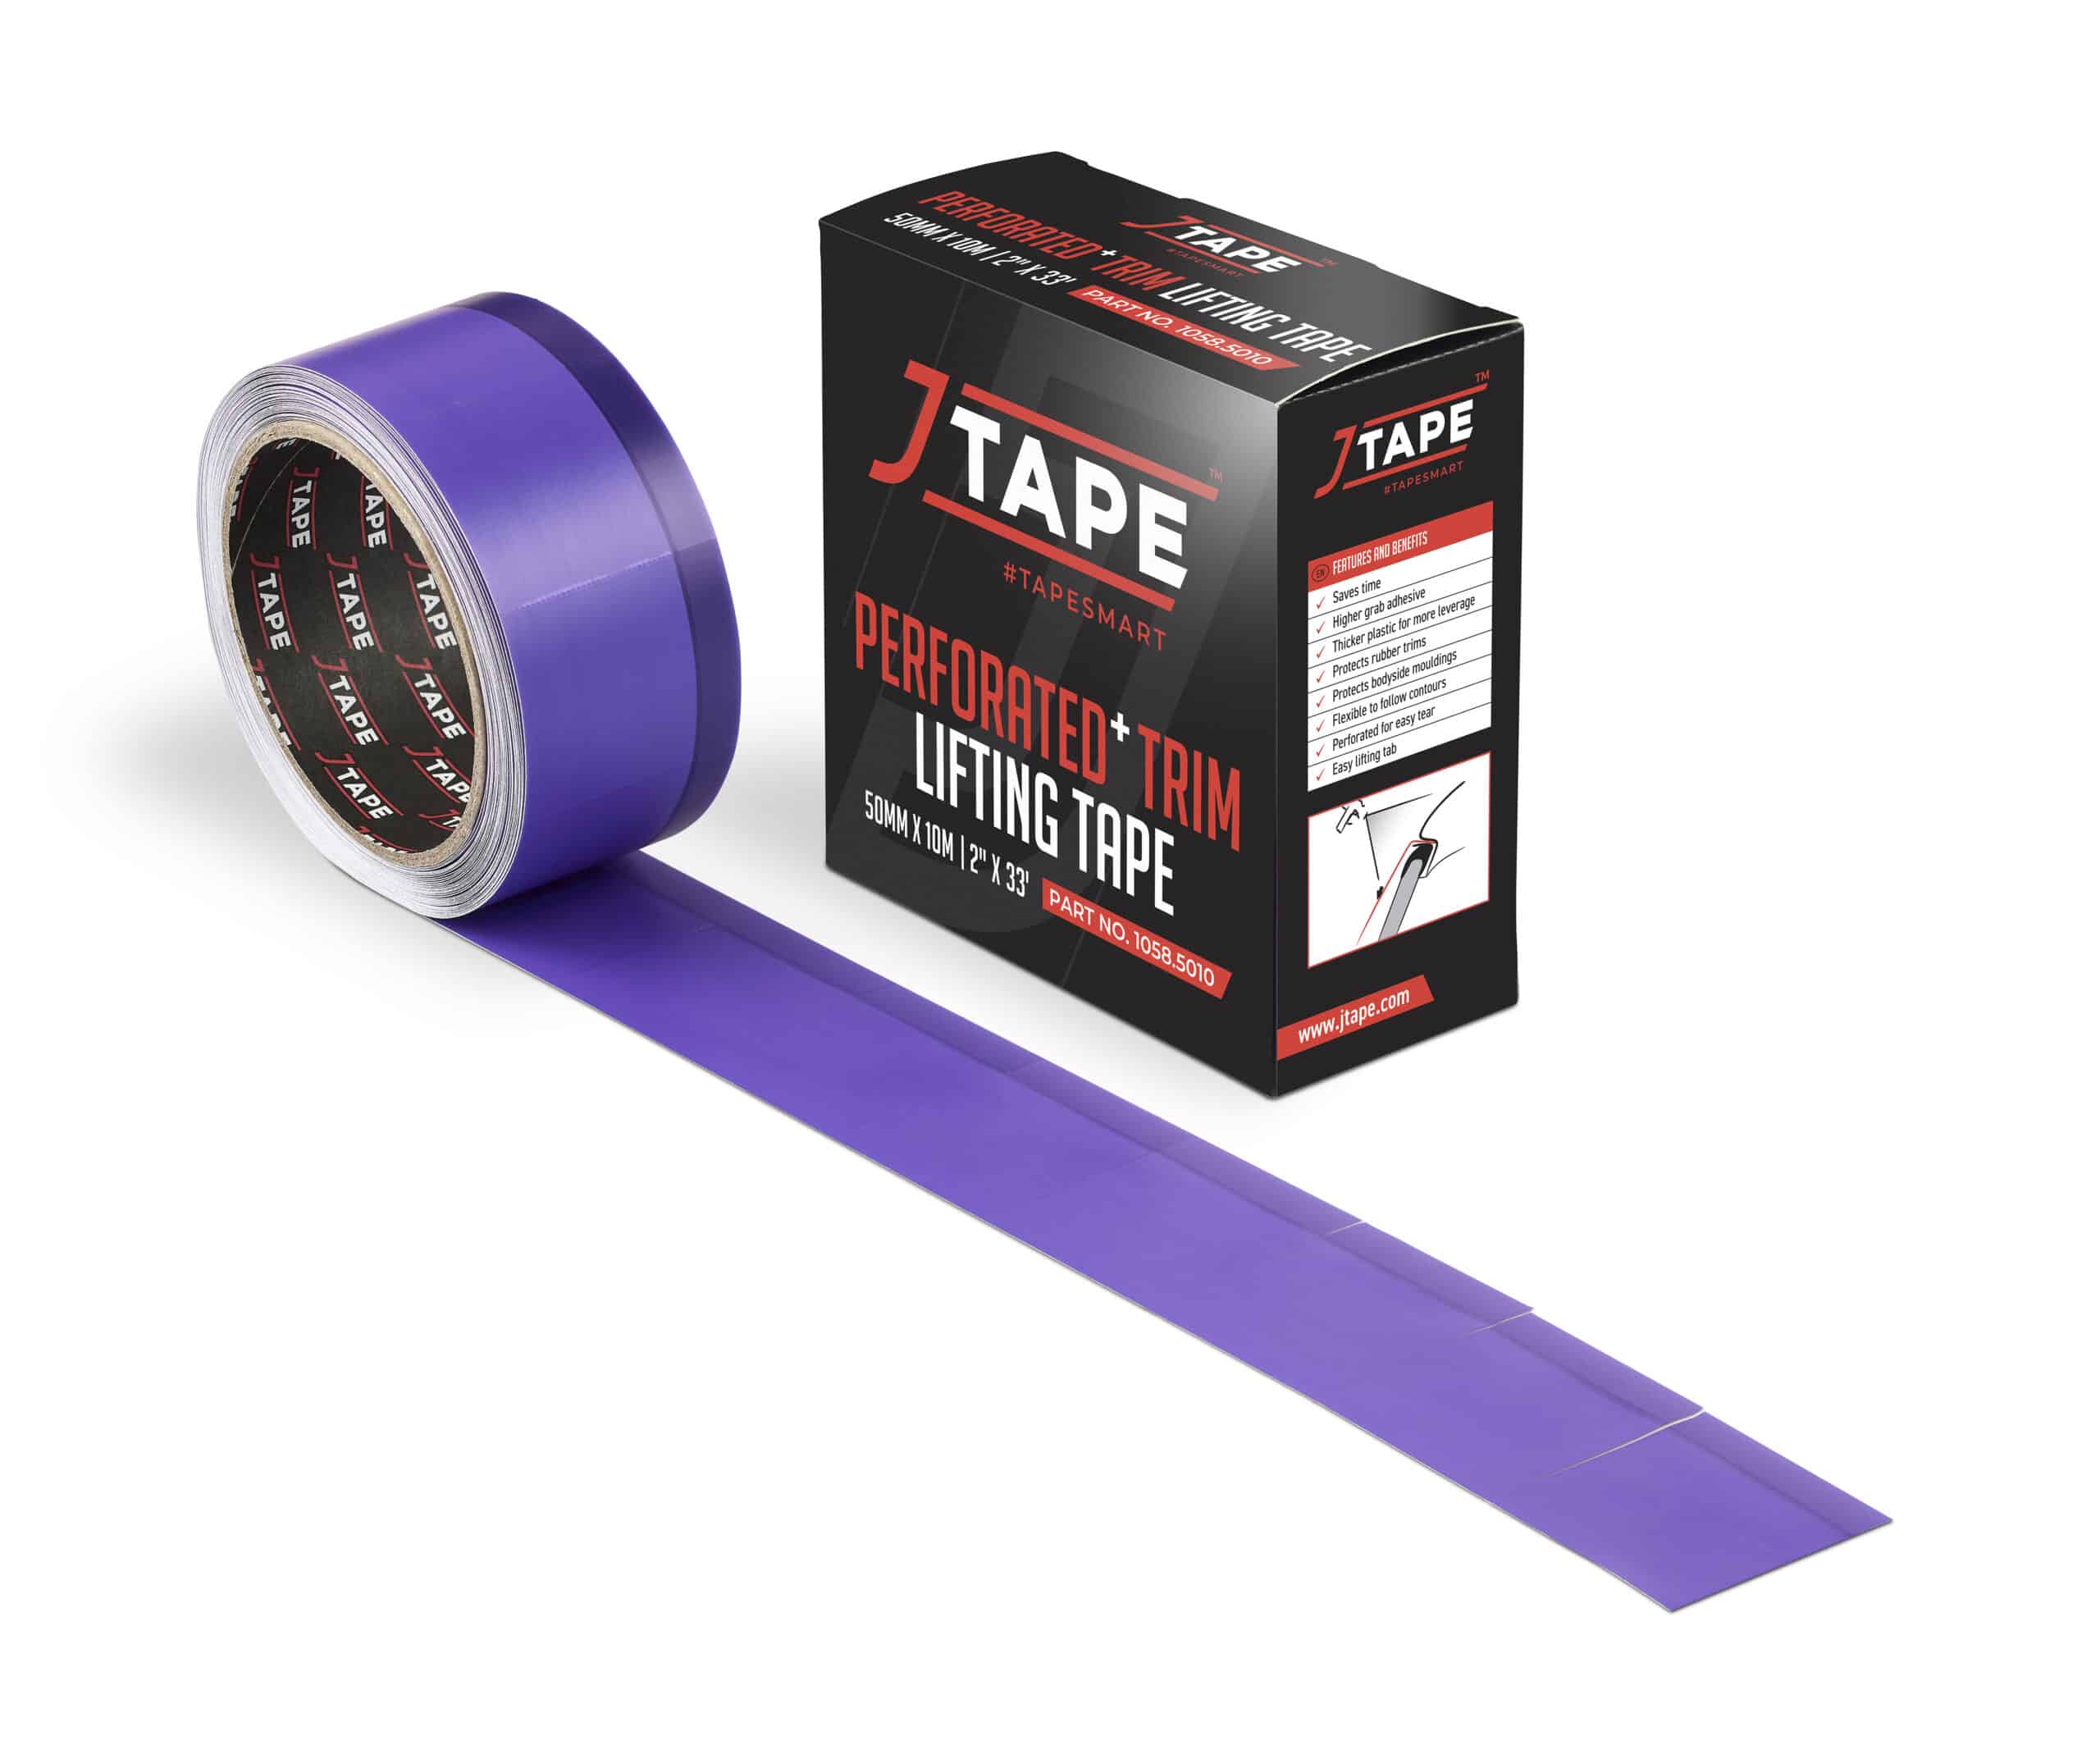 JTAPE Perforated Plus Trim Lifting Tape